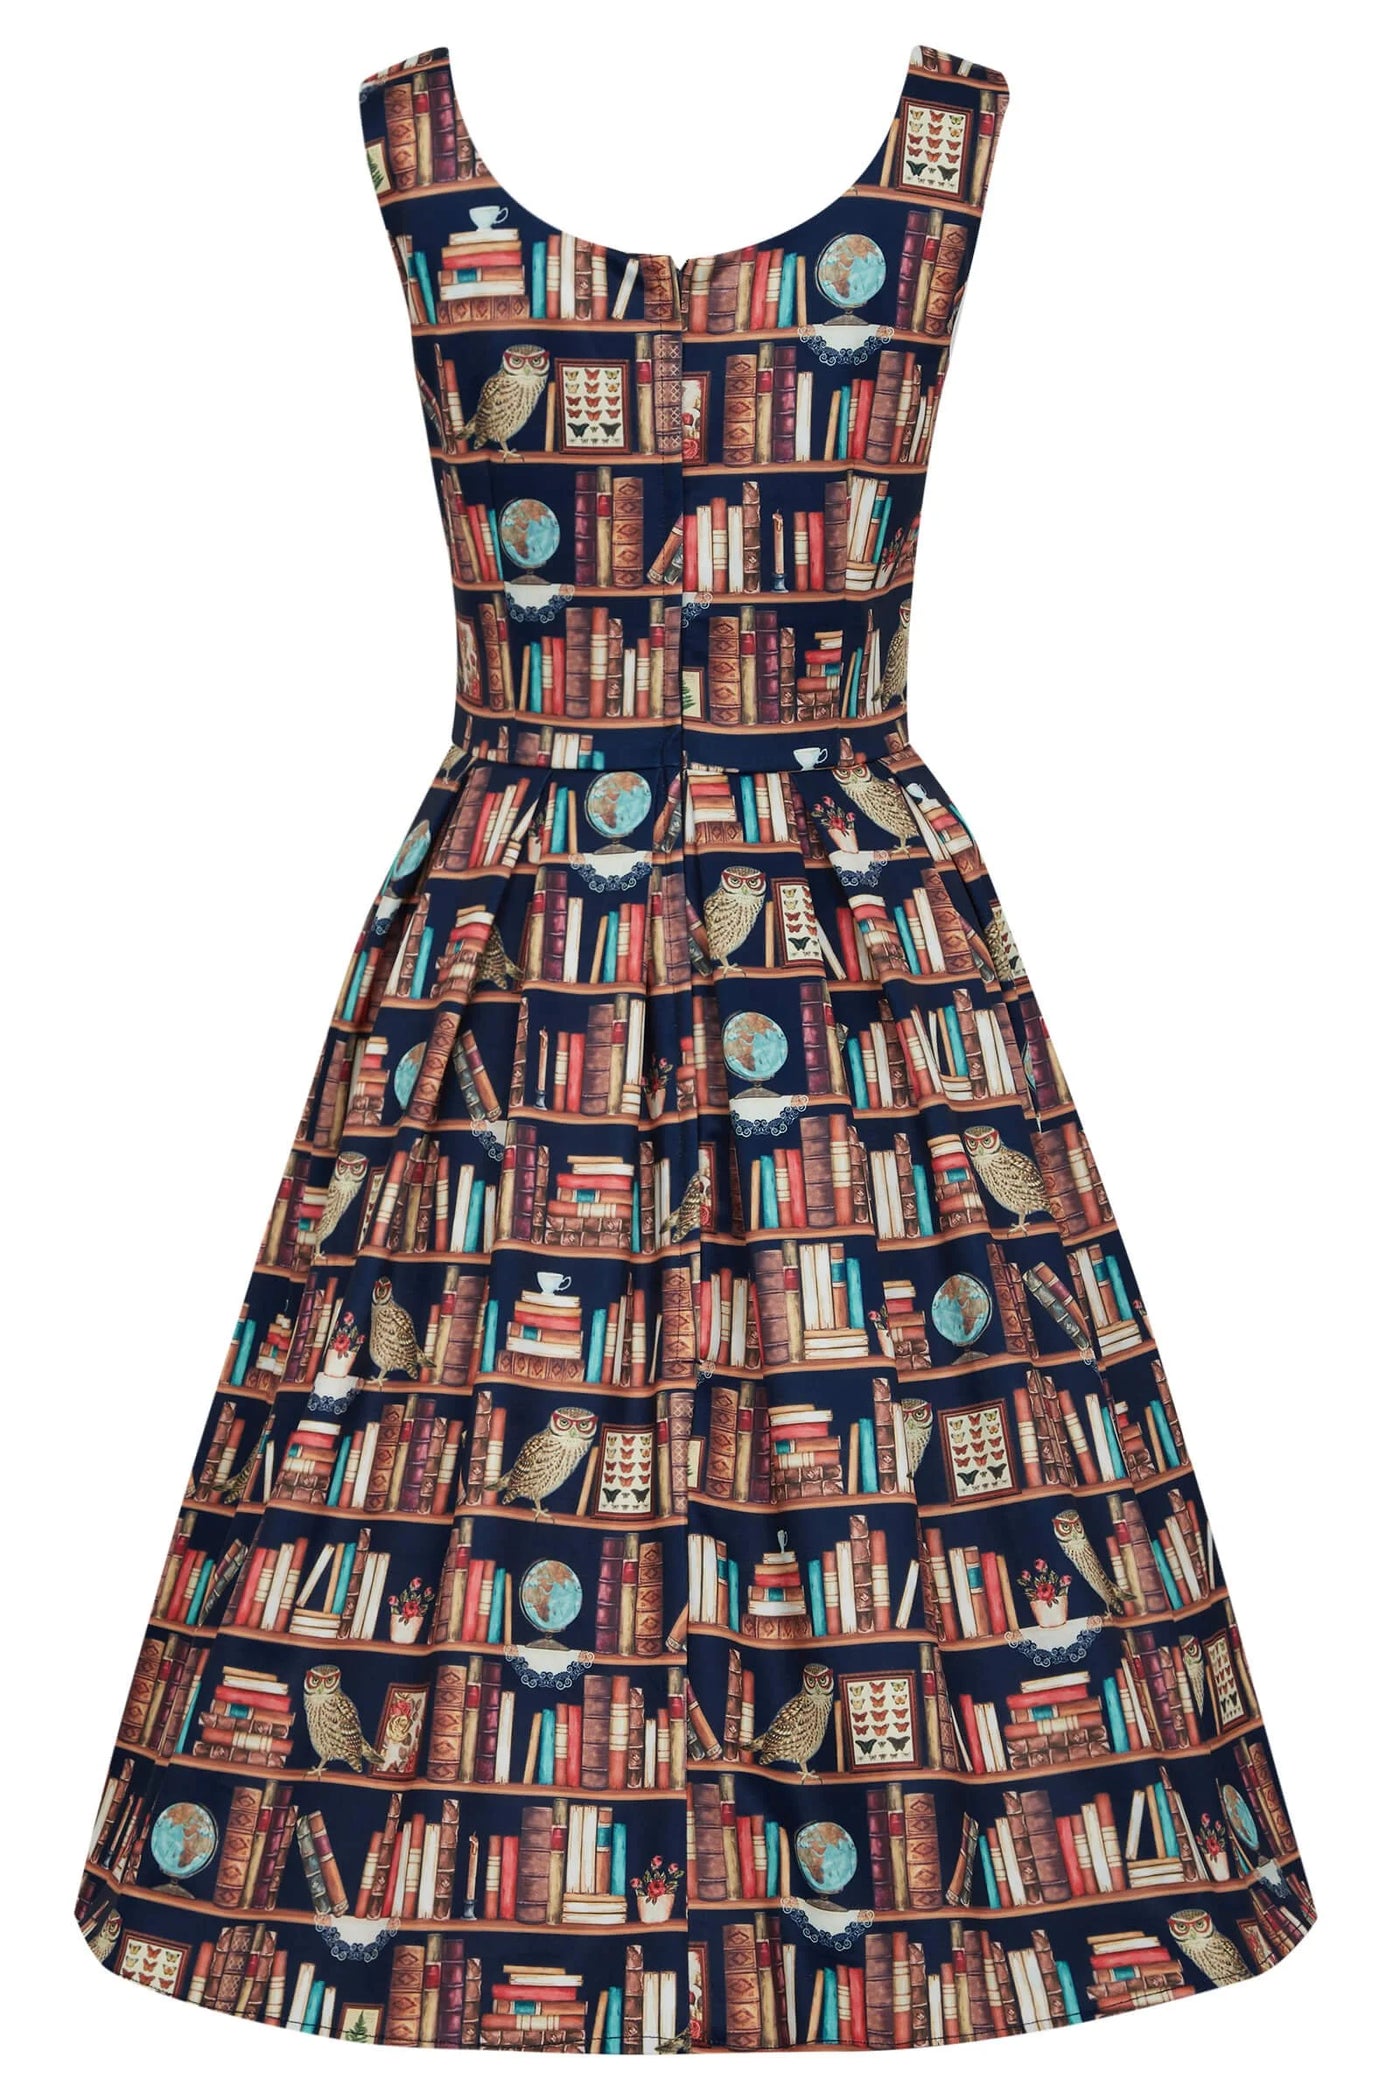 Amanda Library Book & Owl Print Swing Dress back view